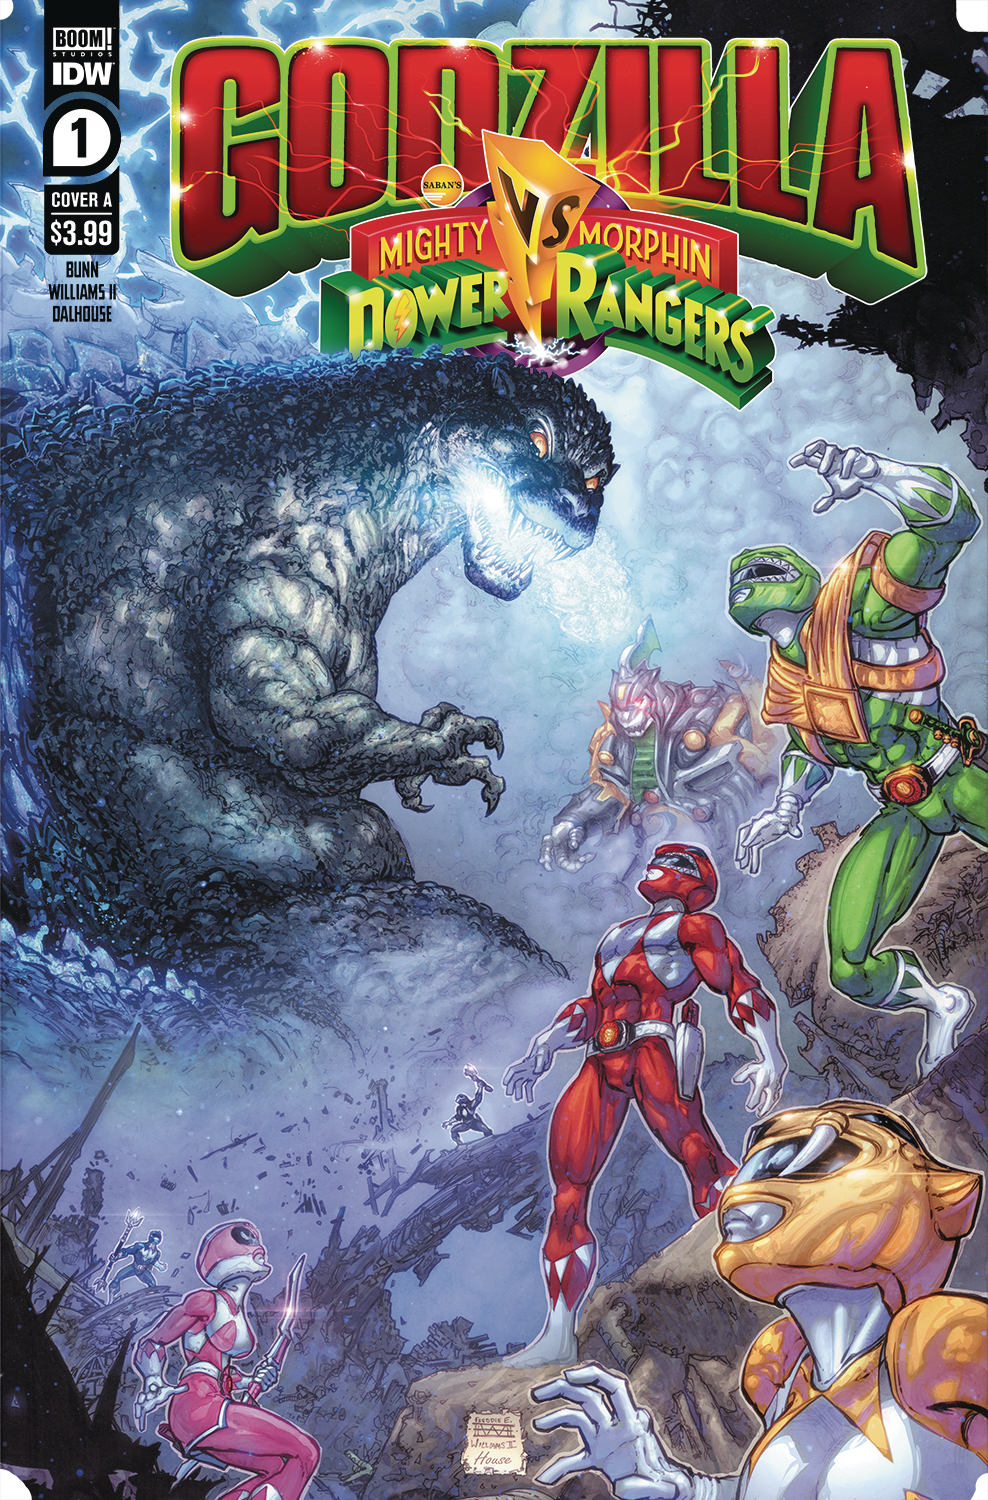 Godzilla Vs Power Rangers #1 Cover A Freddie Williams II (Of 5)